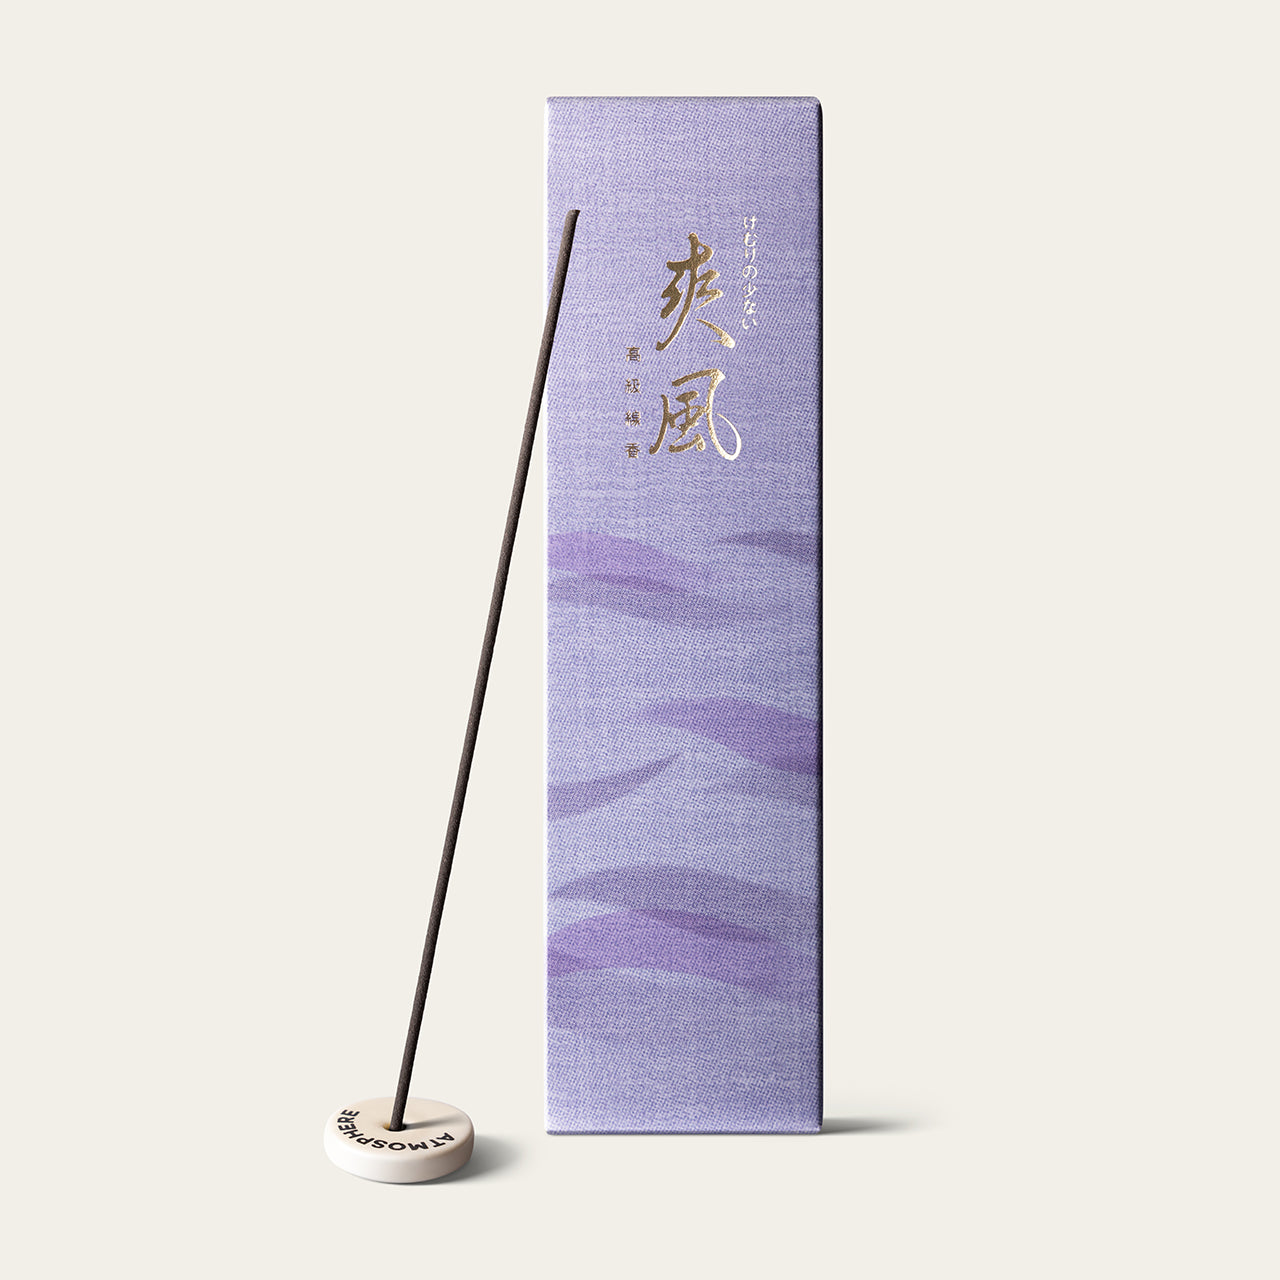 Gyokushodo Sofu Bracing Wind Japanese incense sticks (25 sticks) with Atmosphere ceramic incense holder